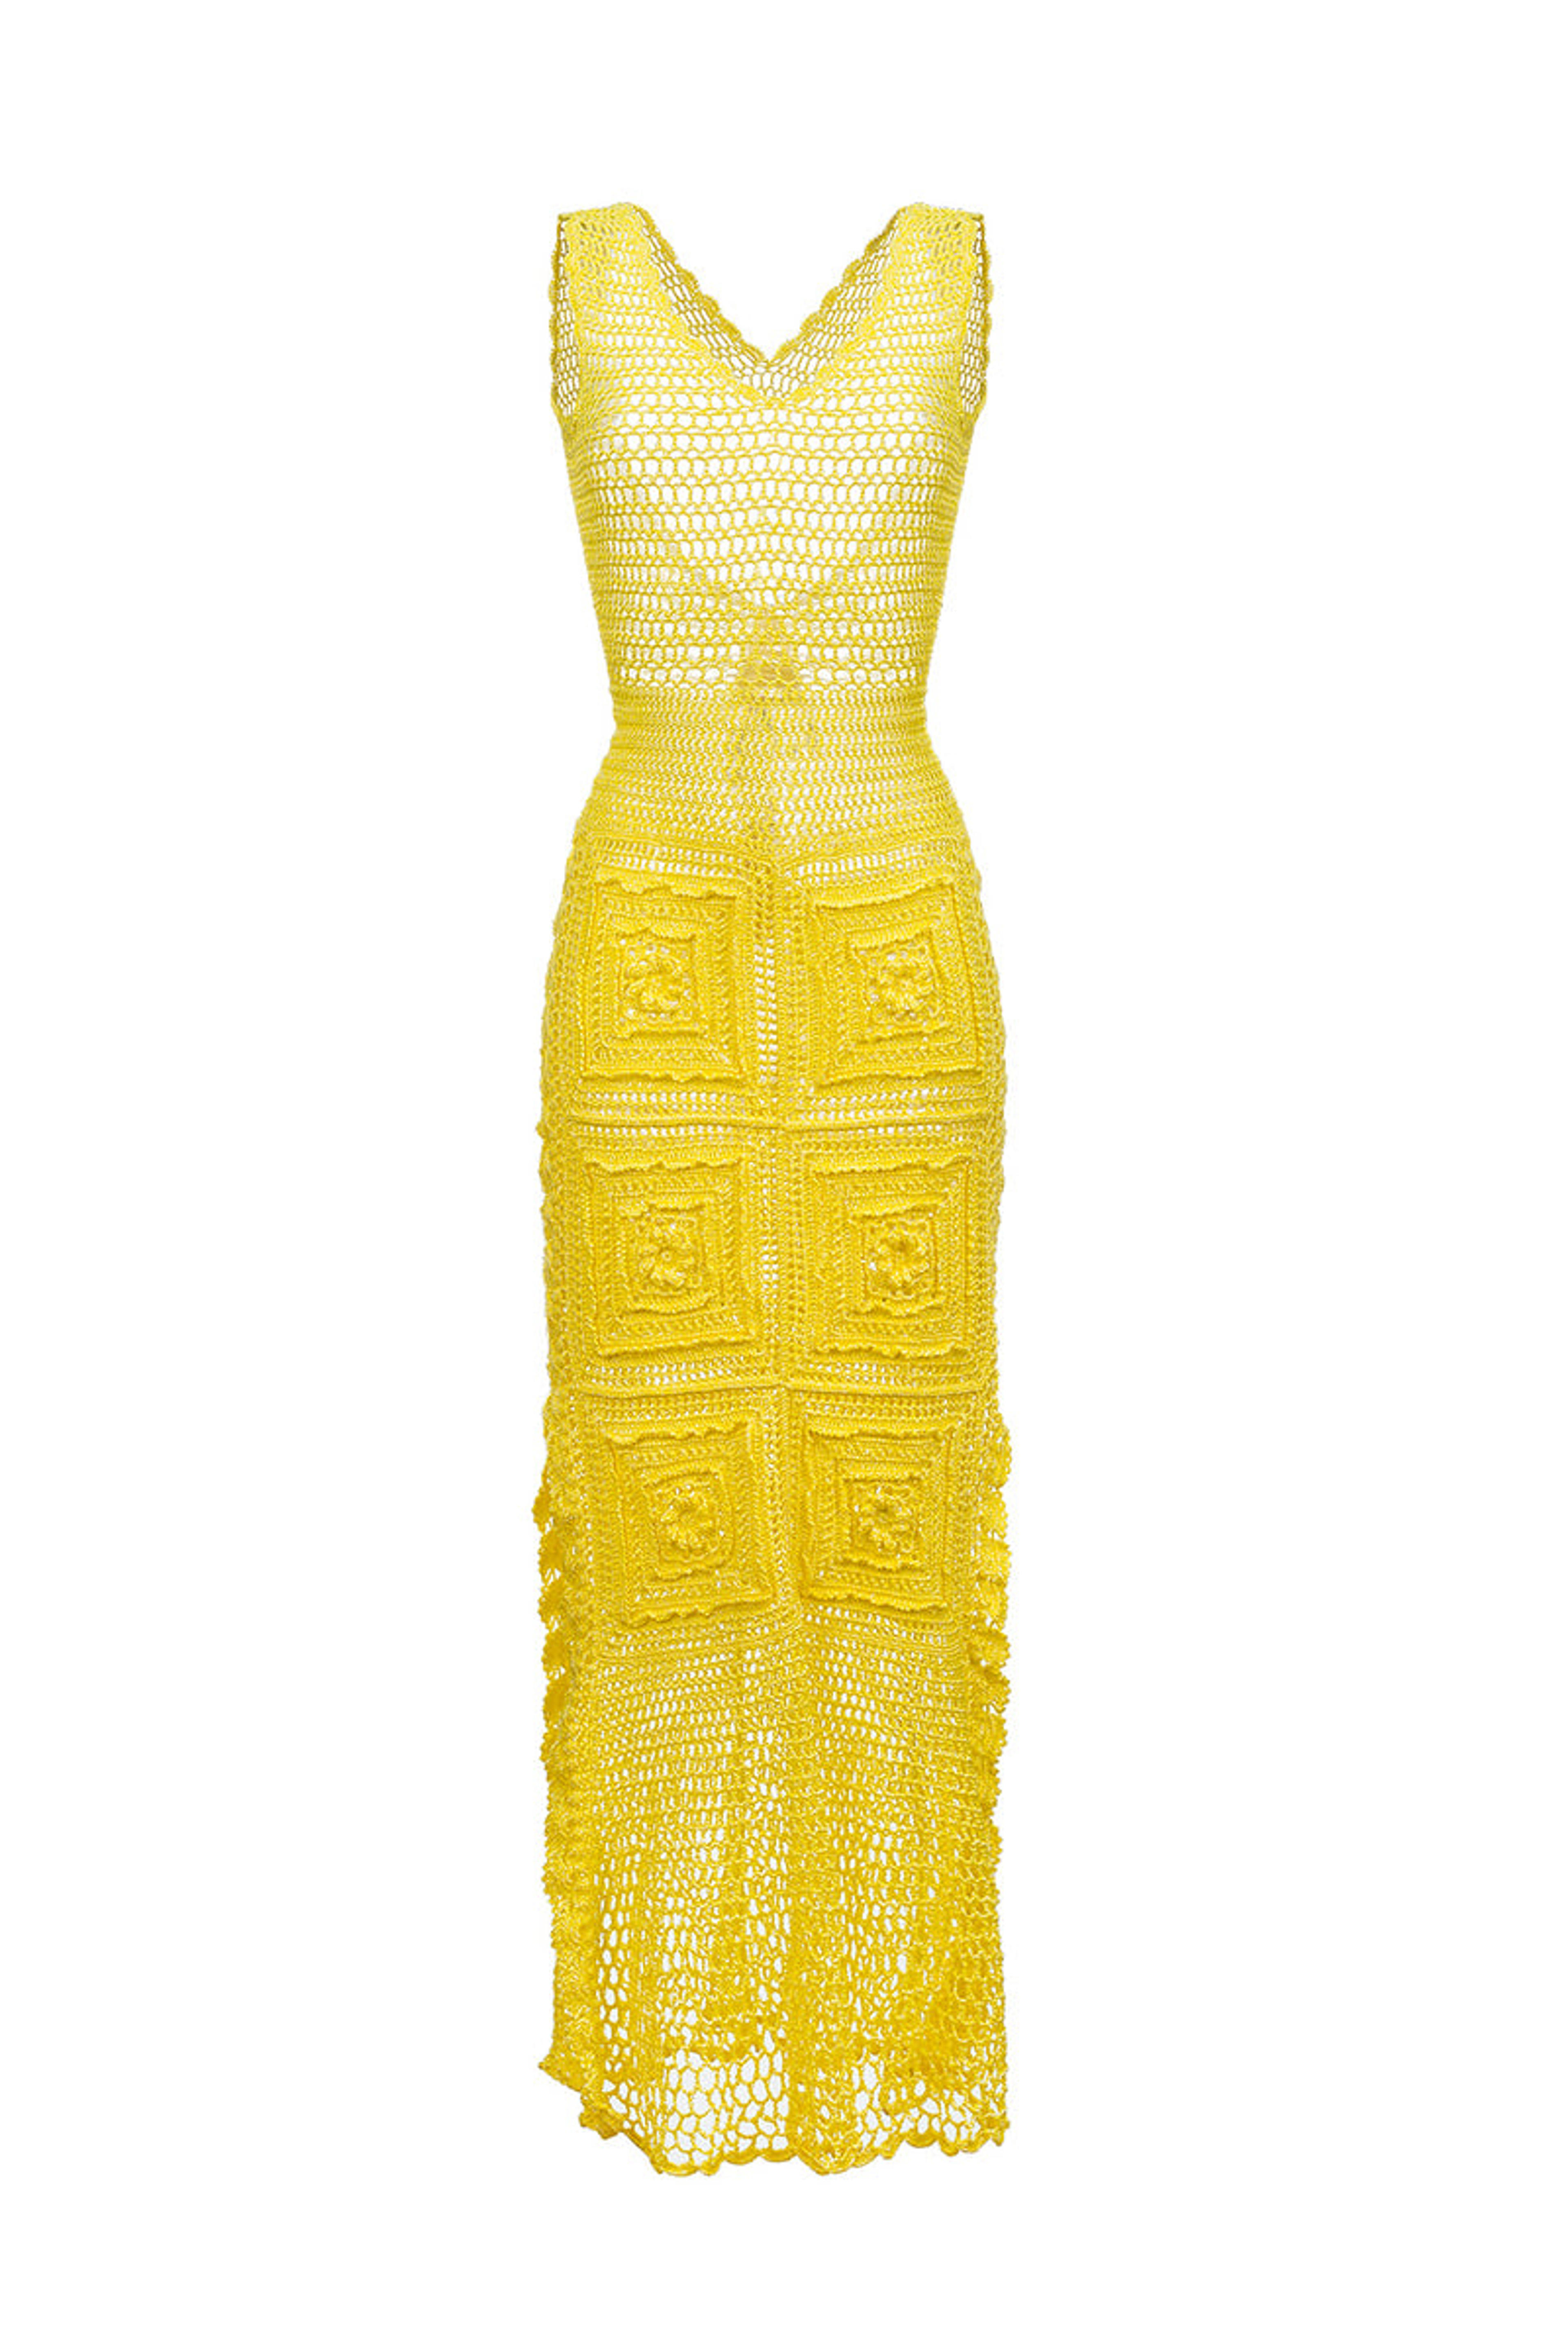 ANDREEVA| Yellow Handmade Crochet Knit Dress